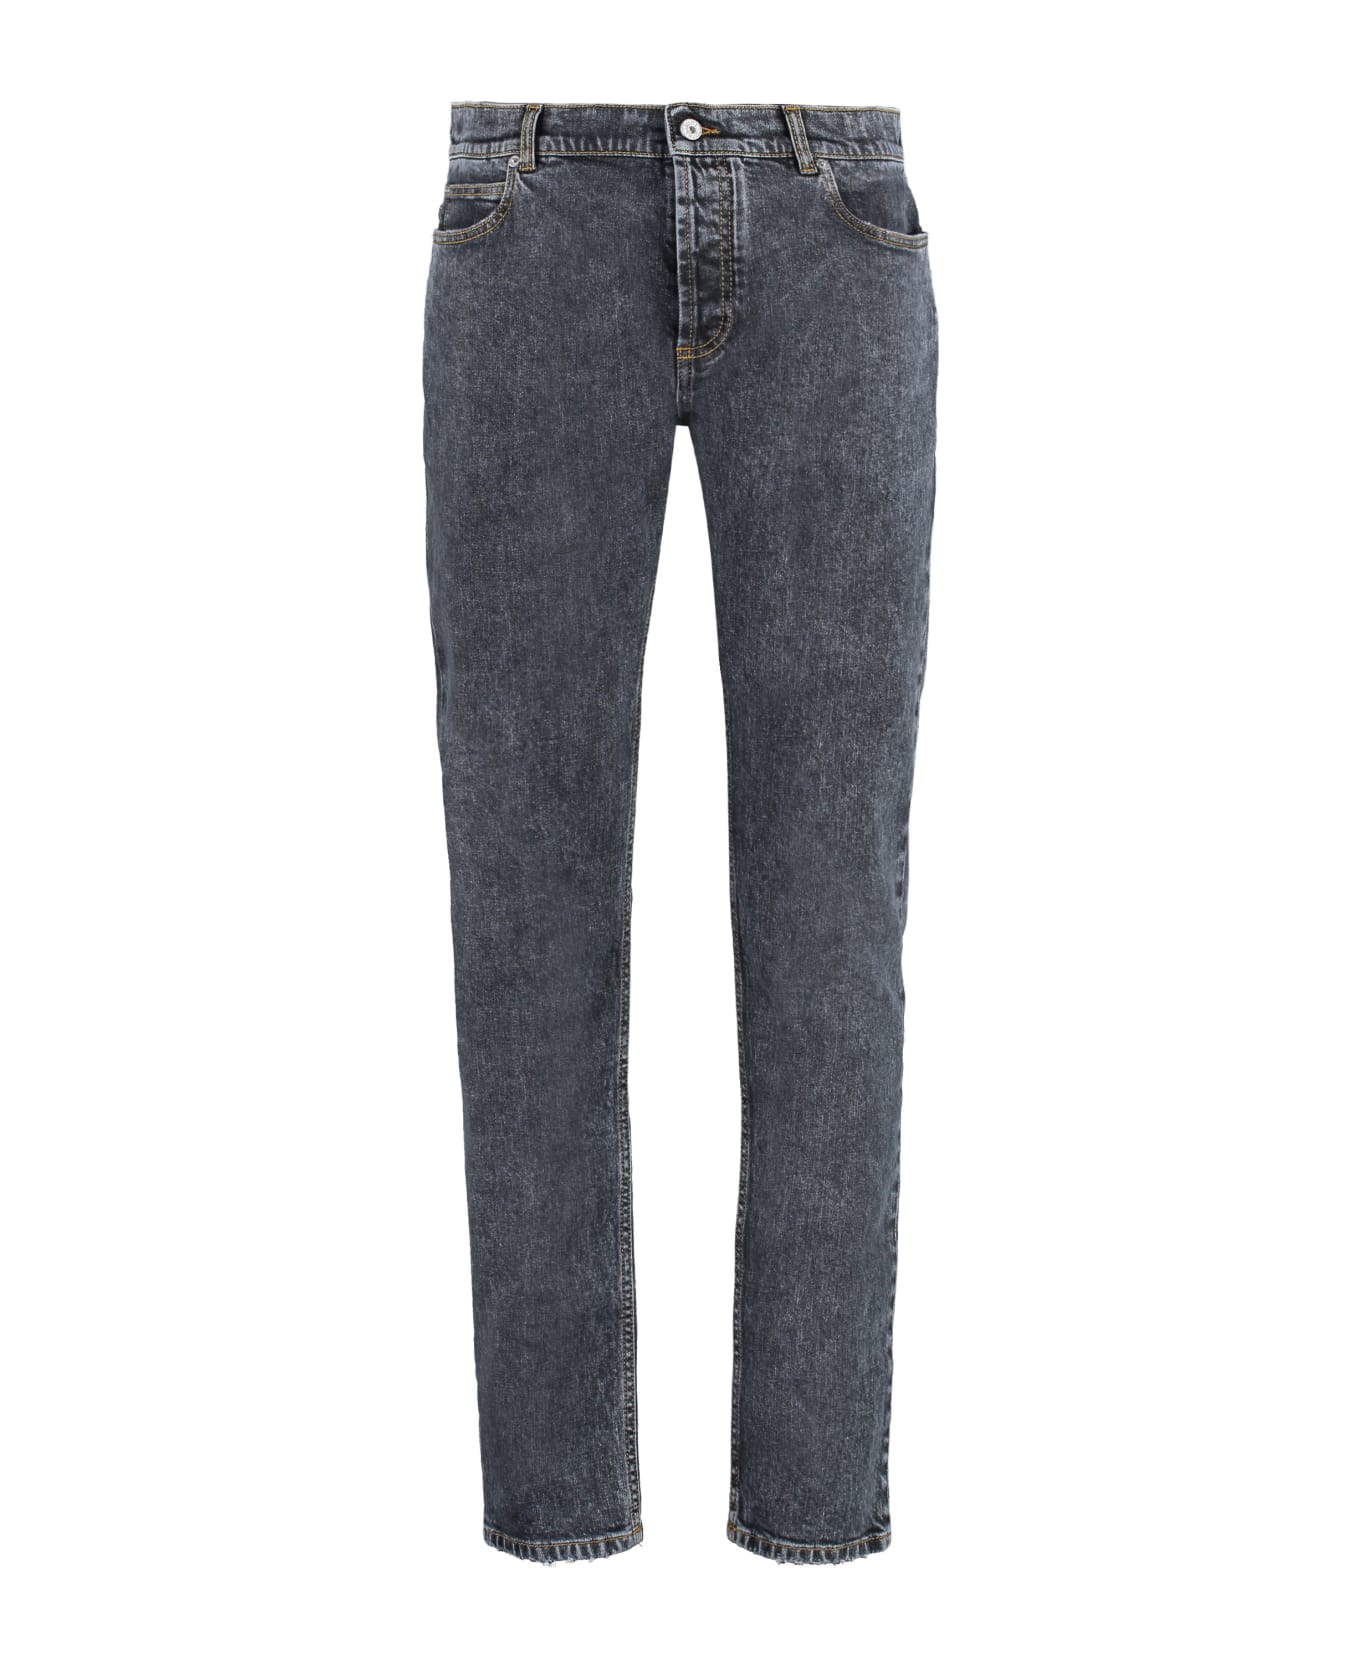 Balmain 5-pocket Slim Fit Jeans - black デニム